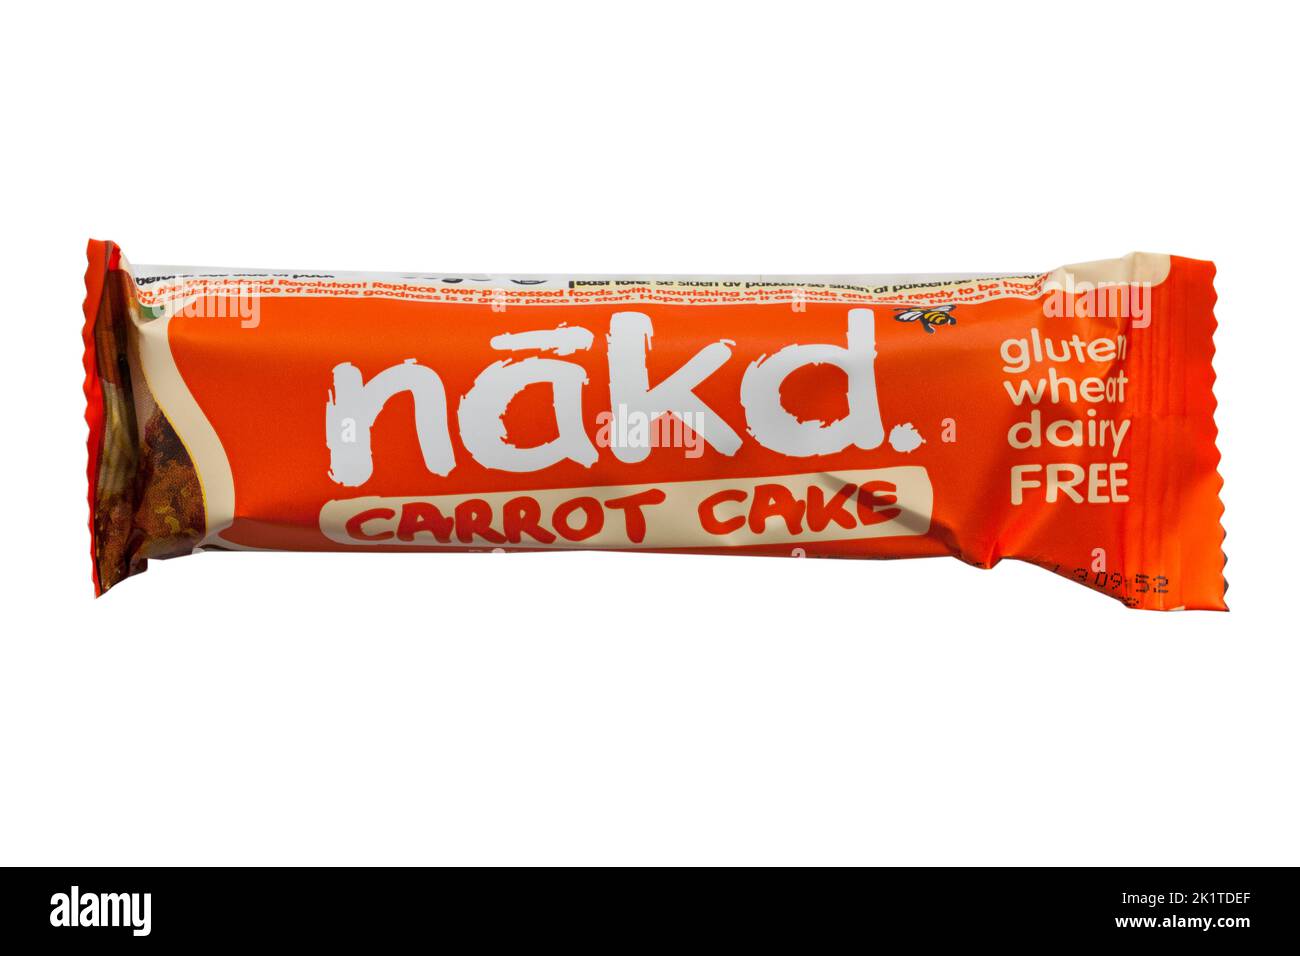 gluten wheat dairy free nakd Carrot Cake raw fruit & nut bar isolated on white background Stock Photo